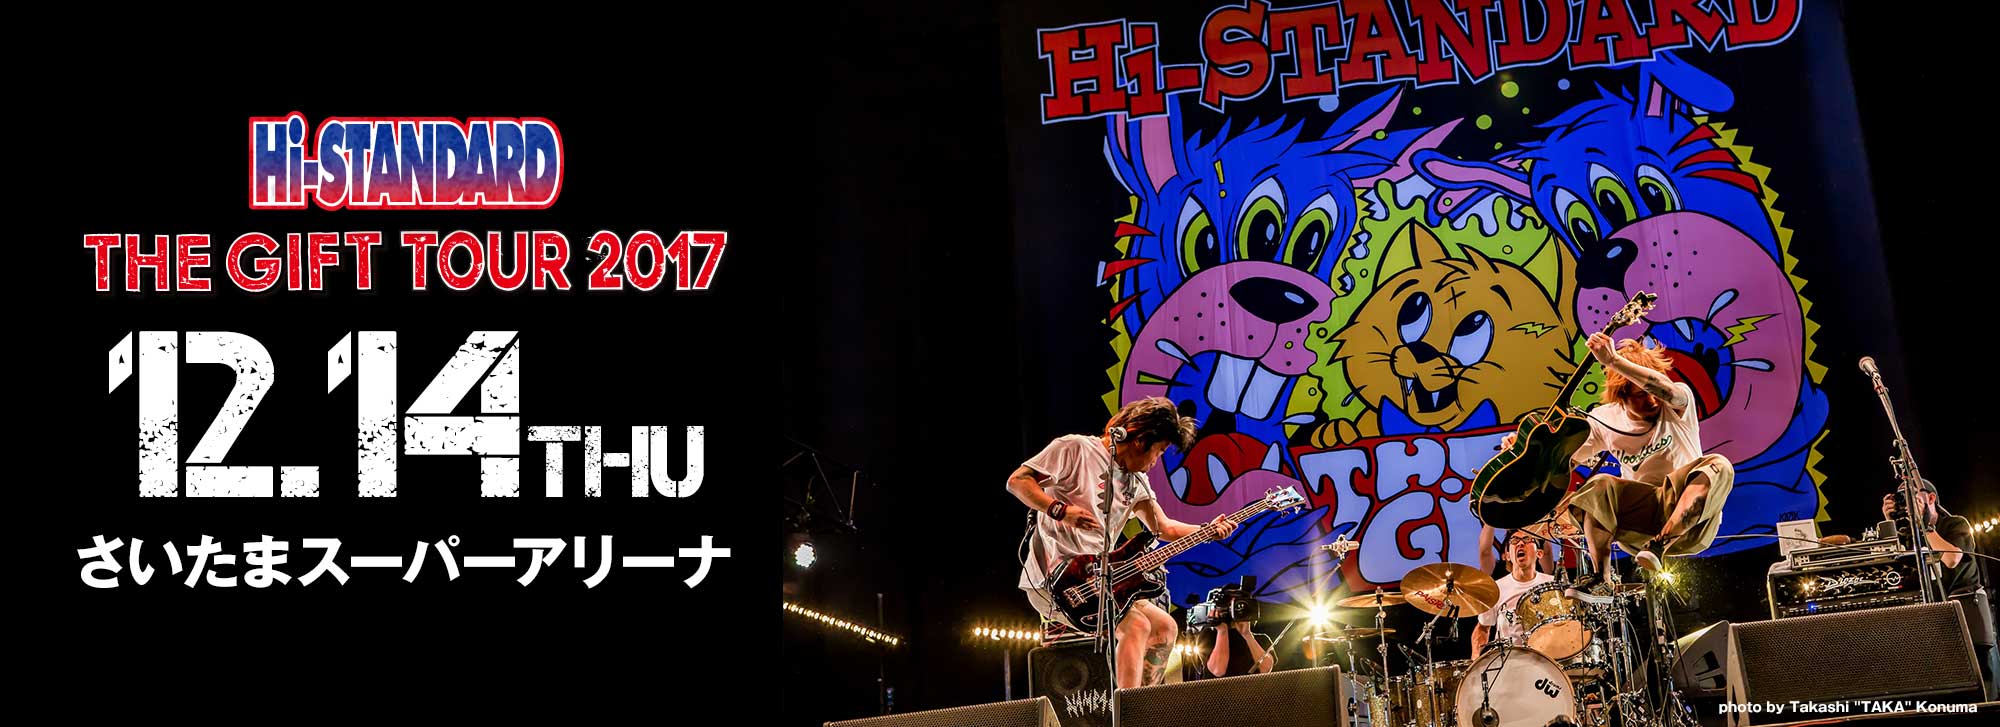 Hi-STANDARD THE GIFT TOUR 2017 12.14 THU さいたまスーパーアリーナ